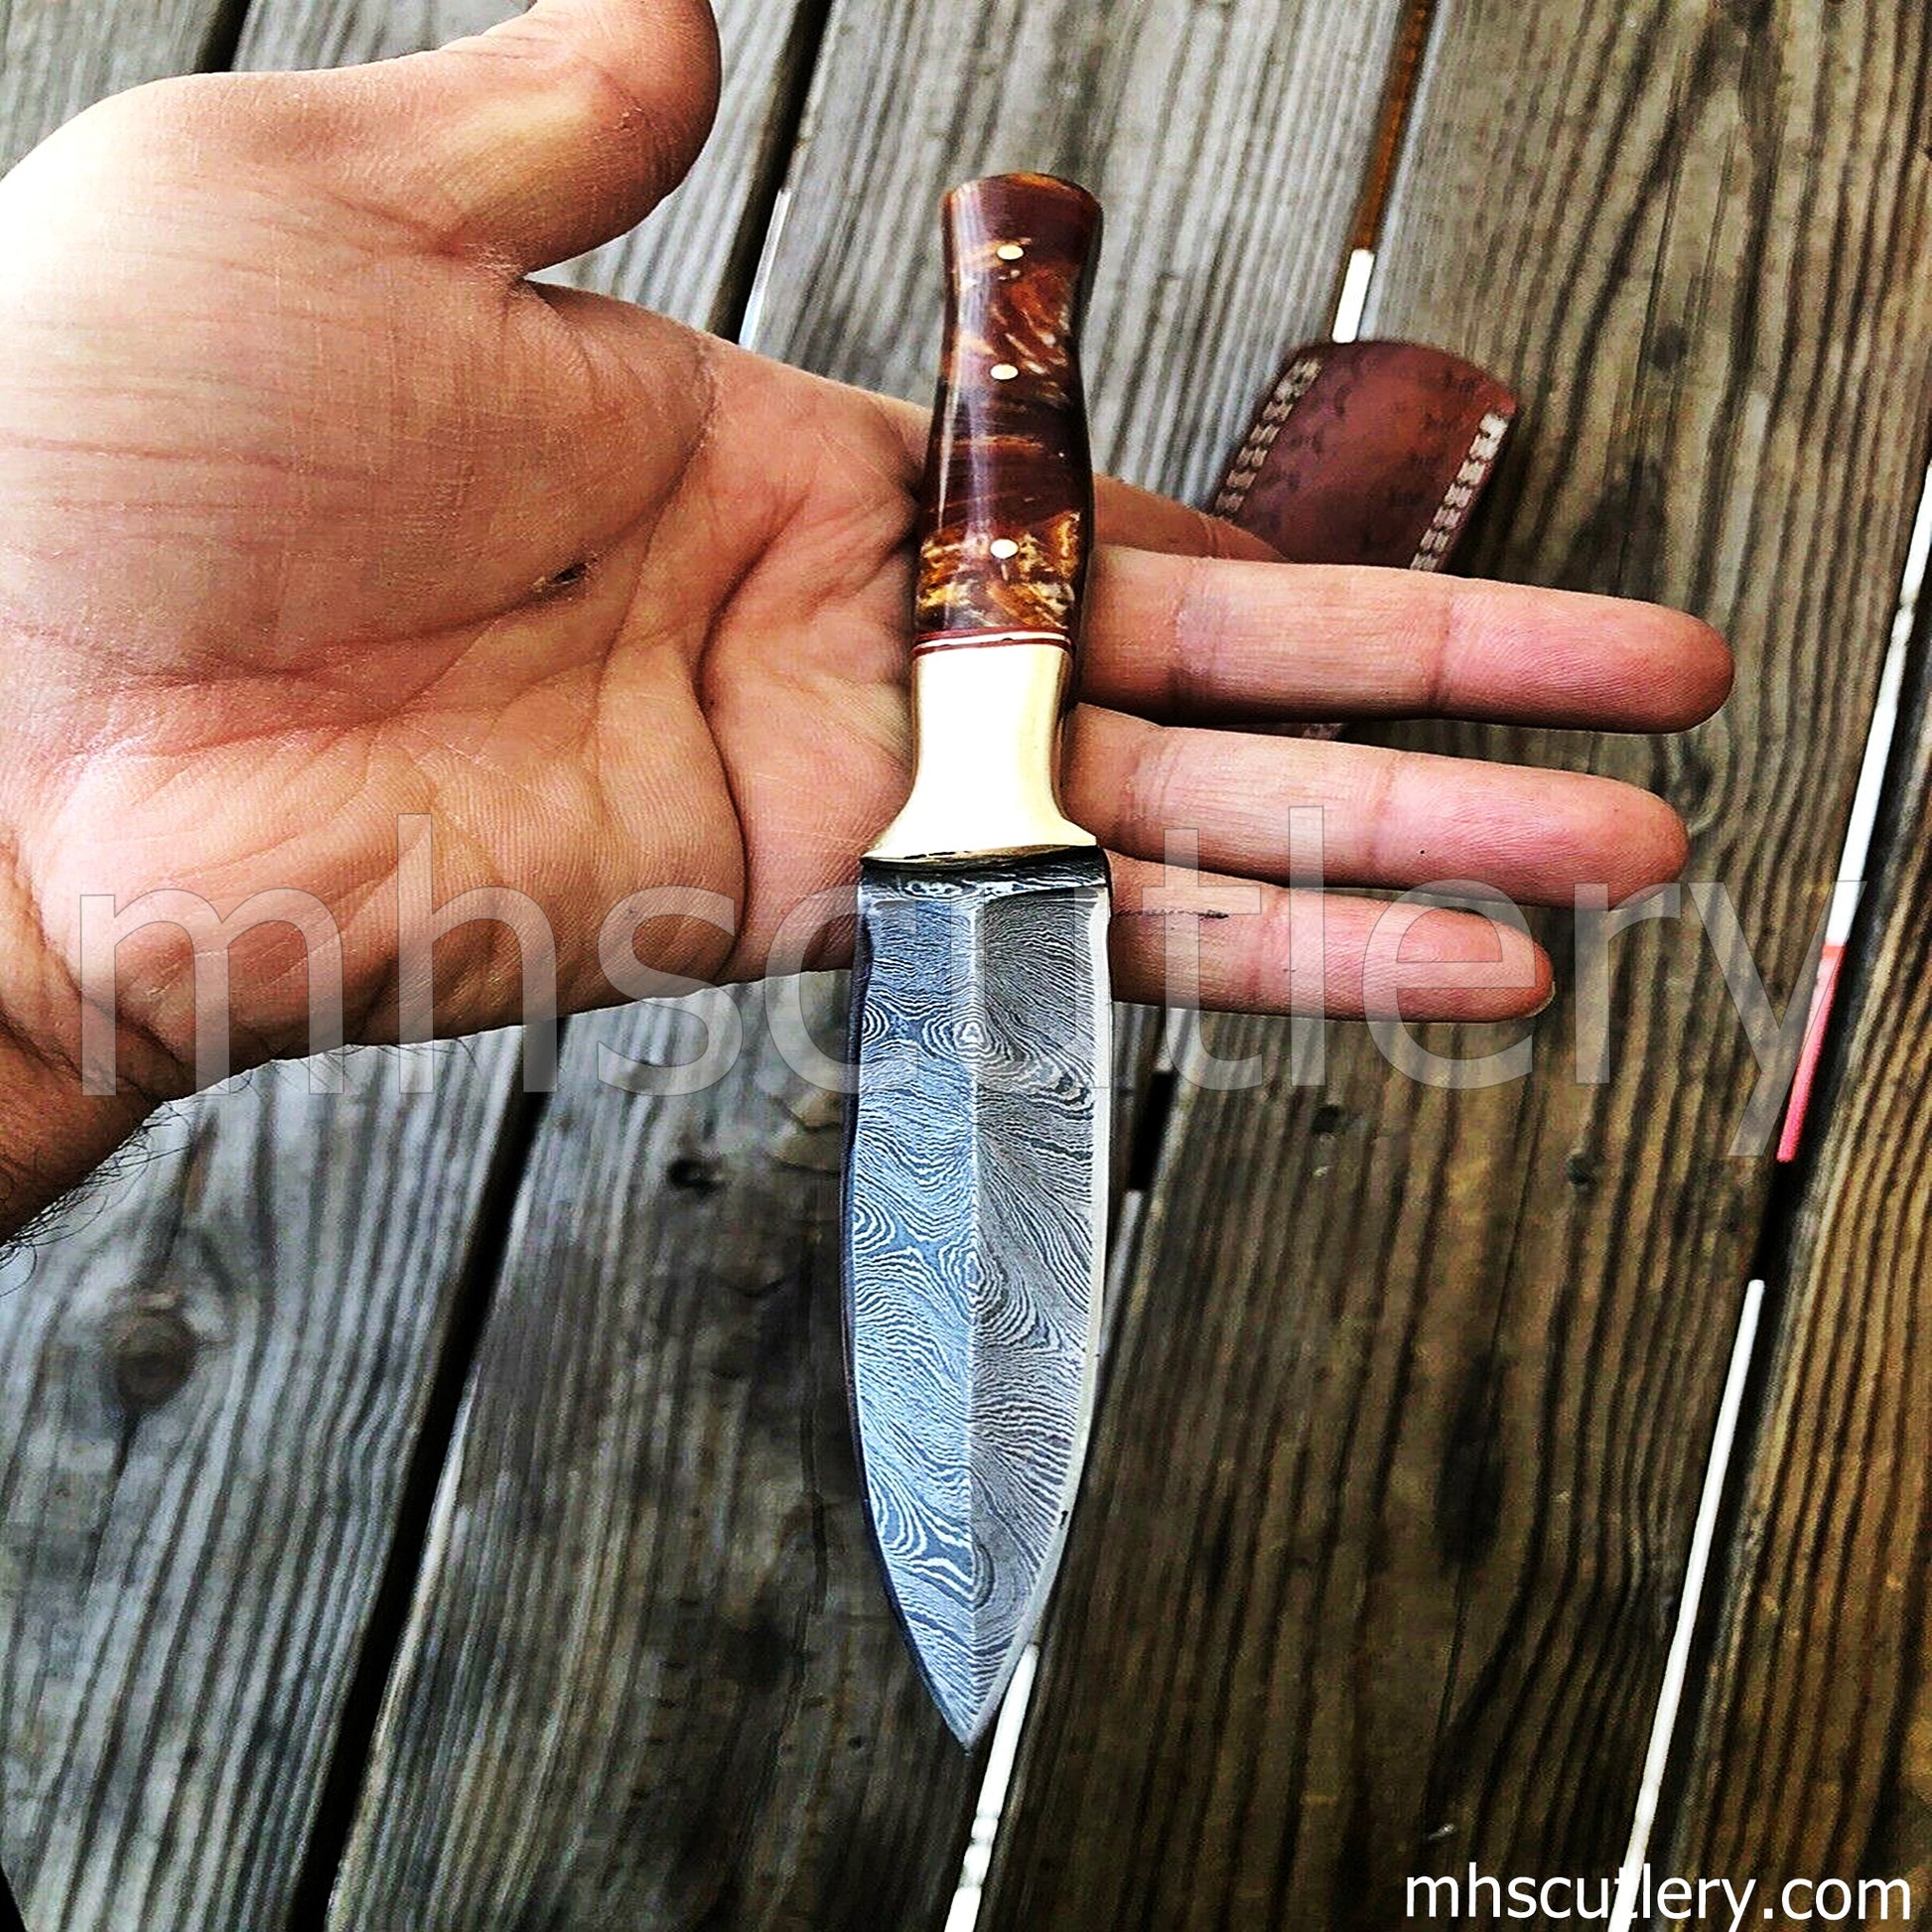 Damascus Steel Boot Dagger Knife / Resin Handle | mhscutlery